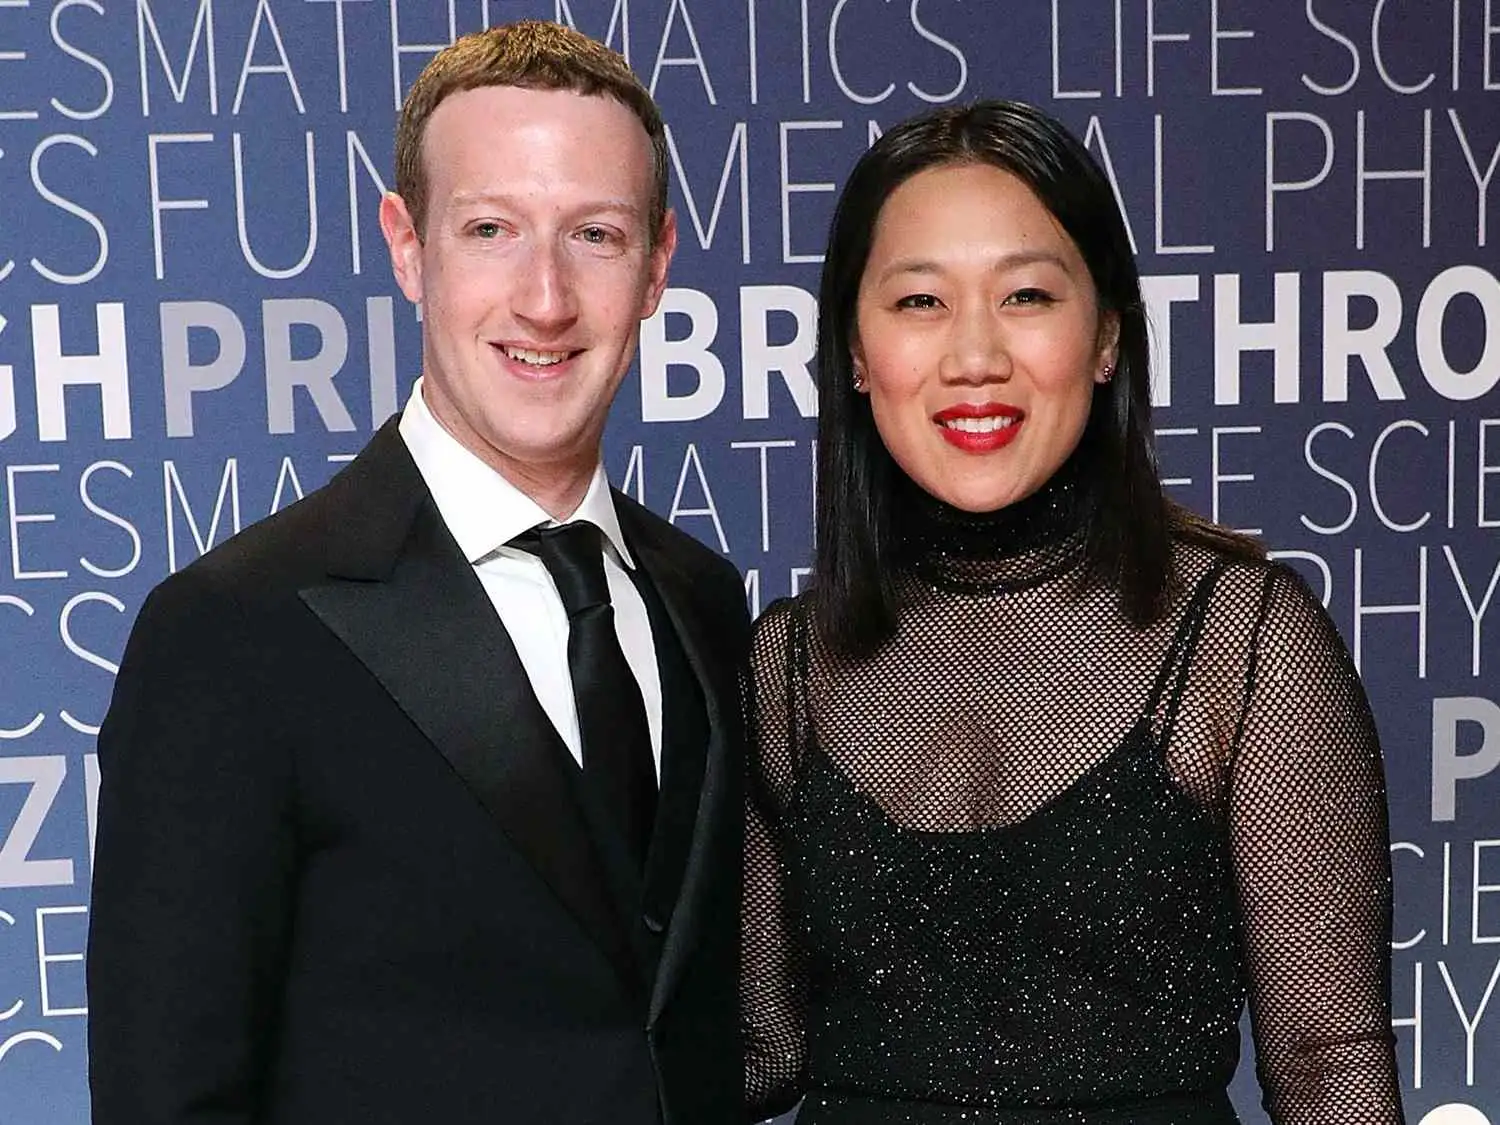 Philanthropists-Mark-Zuckerberg-and-Priscilla-Chan